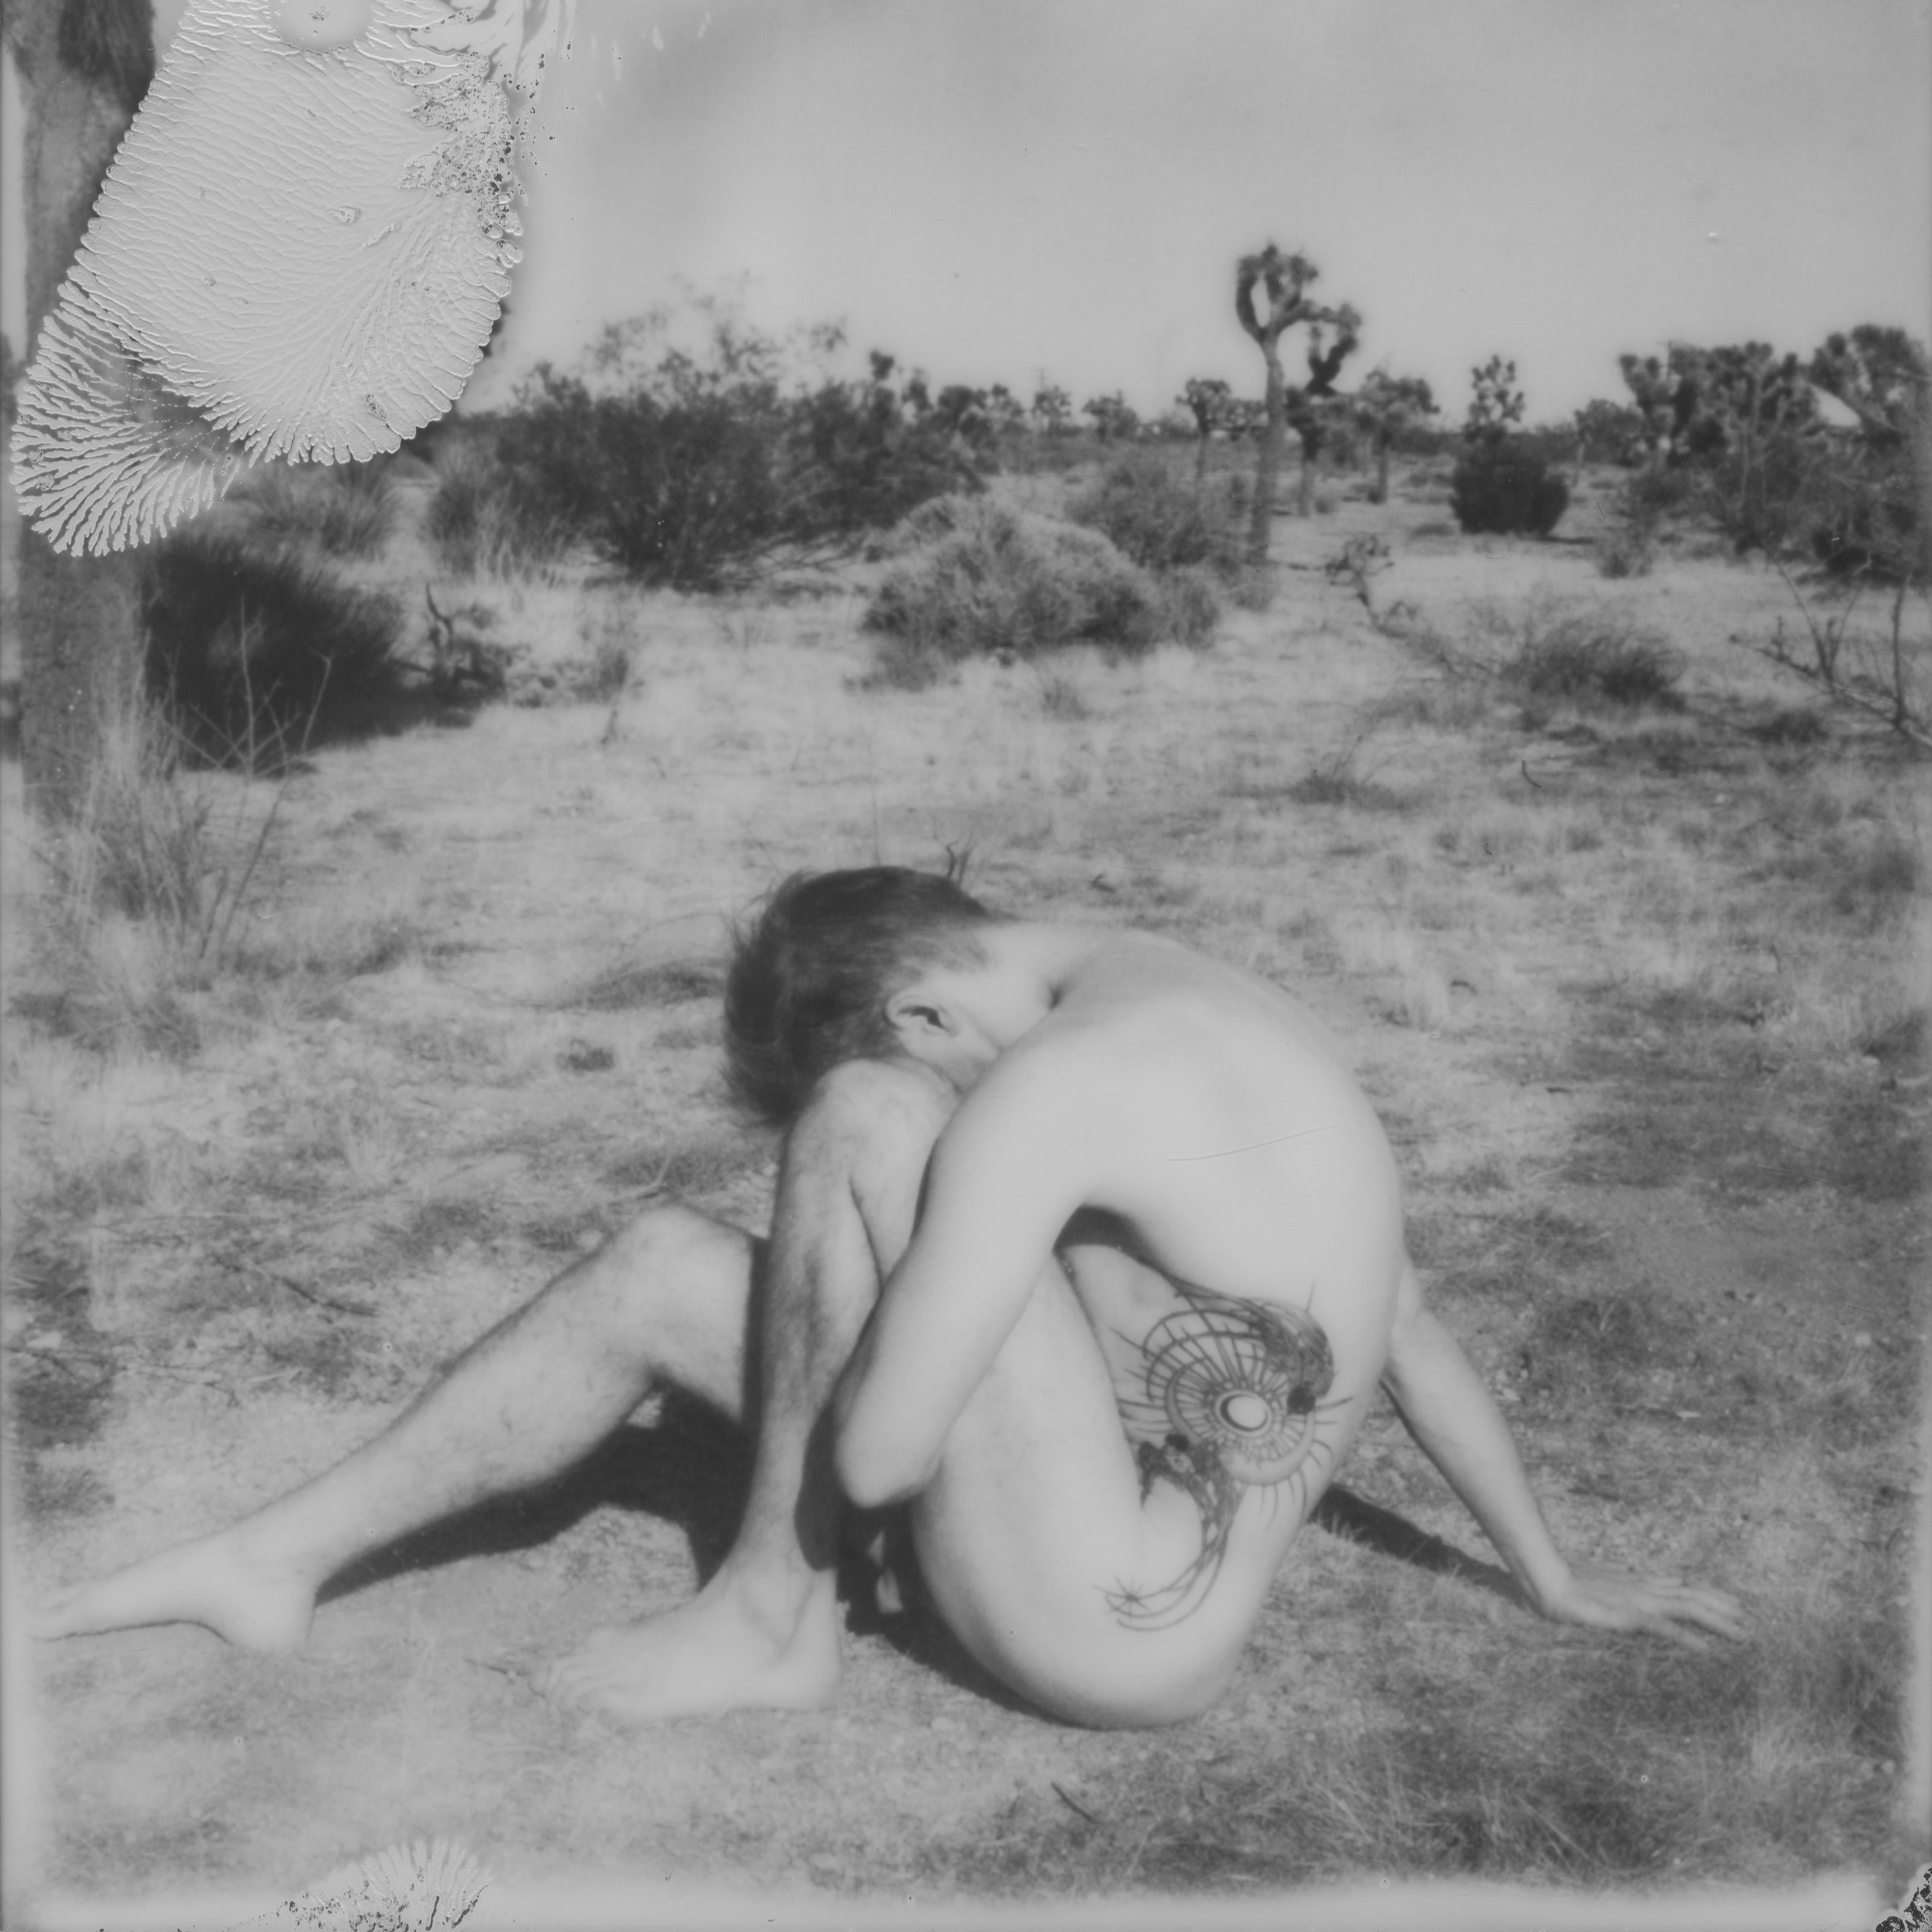 Kirsten Thys van den Audenaerde Black and White Photograph - Come undone - Contemporary, Polaroid, Nude, 21st Century, Joshua Tree